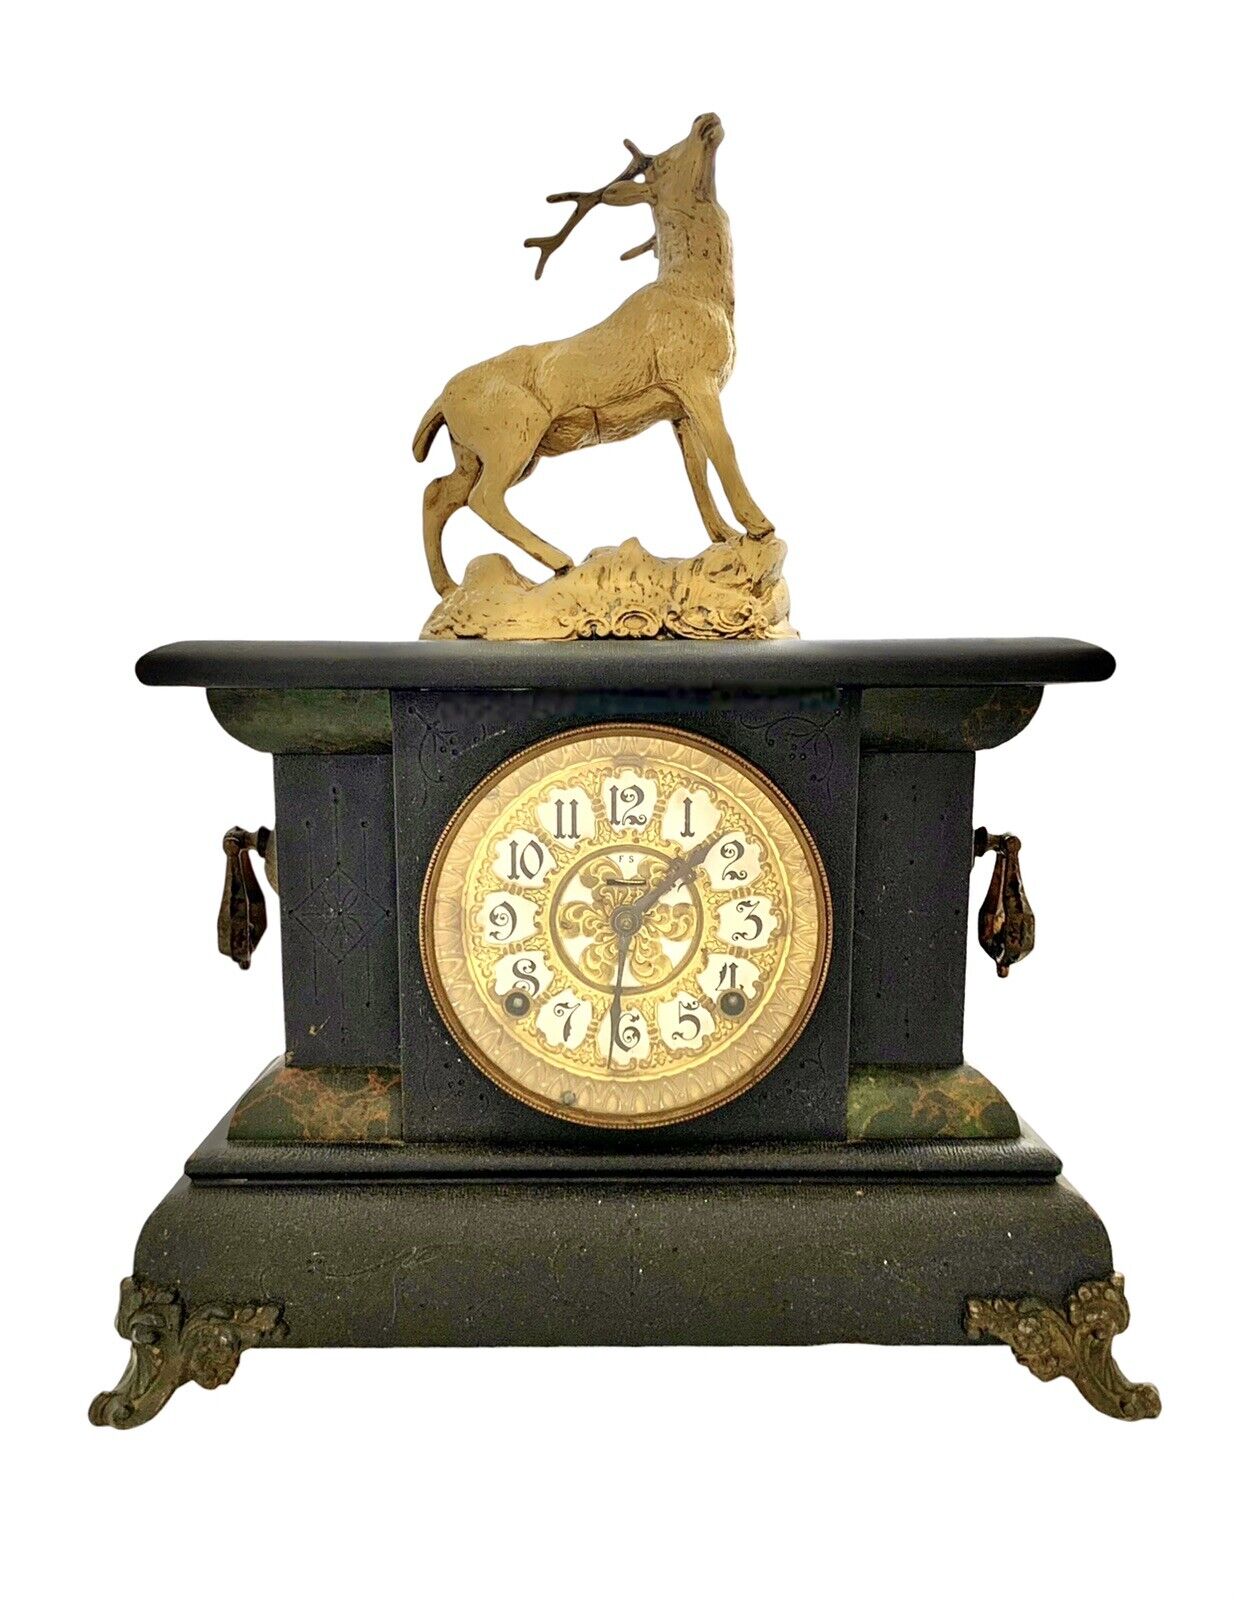 Clock Mechanical Mantle with Deer Stag Figurine on Top Old Vintage Decor